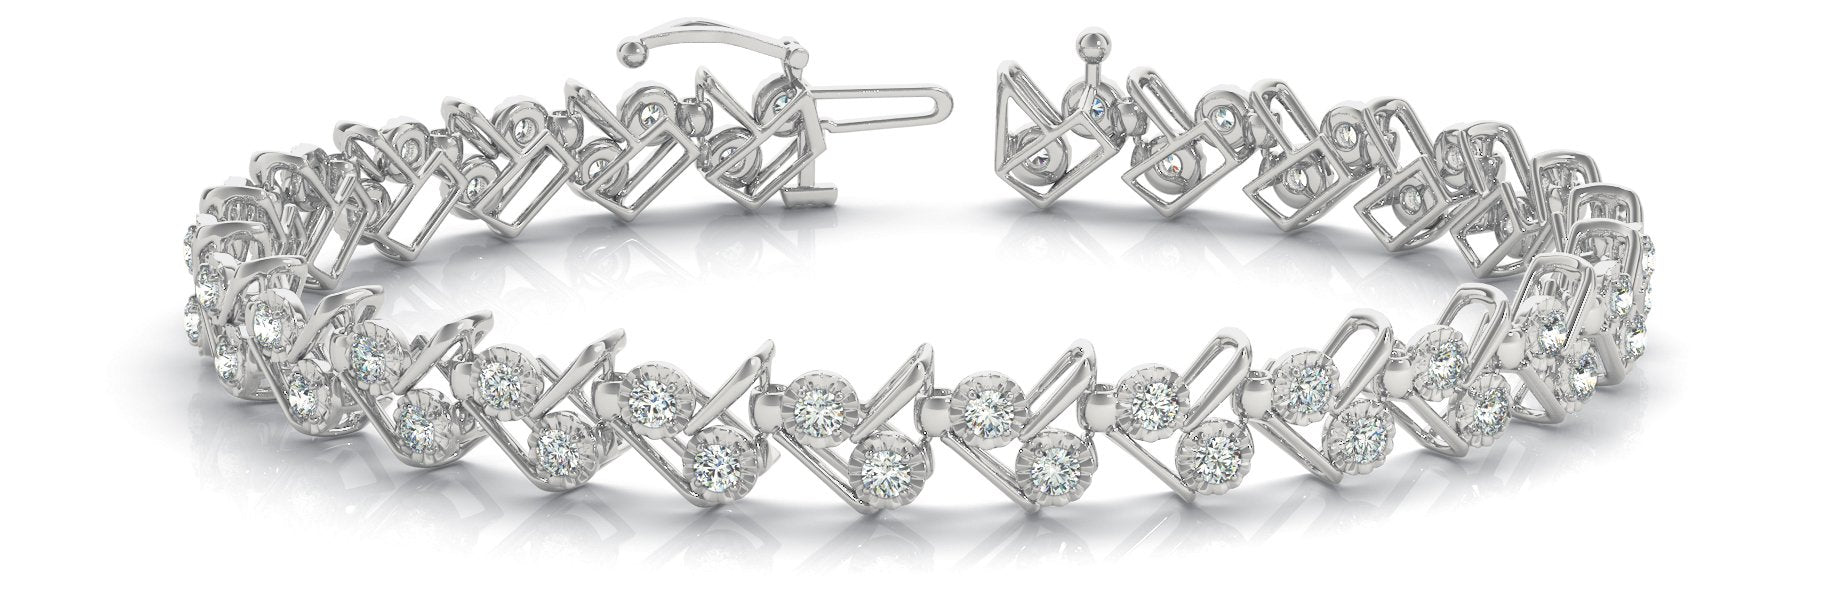 Fancy Diamond Bracelet Ladies 1.22ct tw - 14kt White Gold